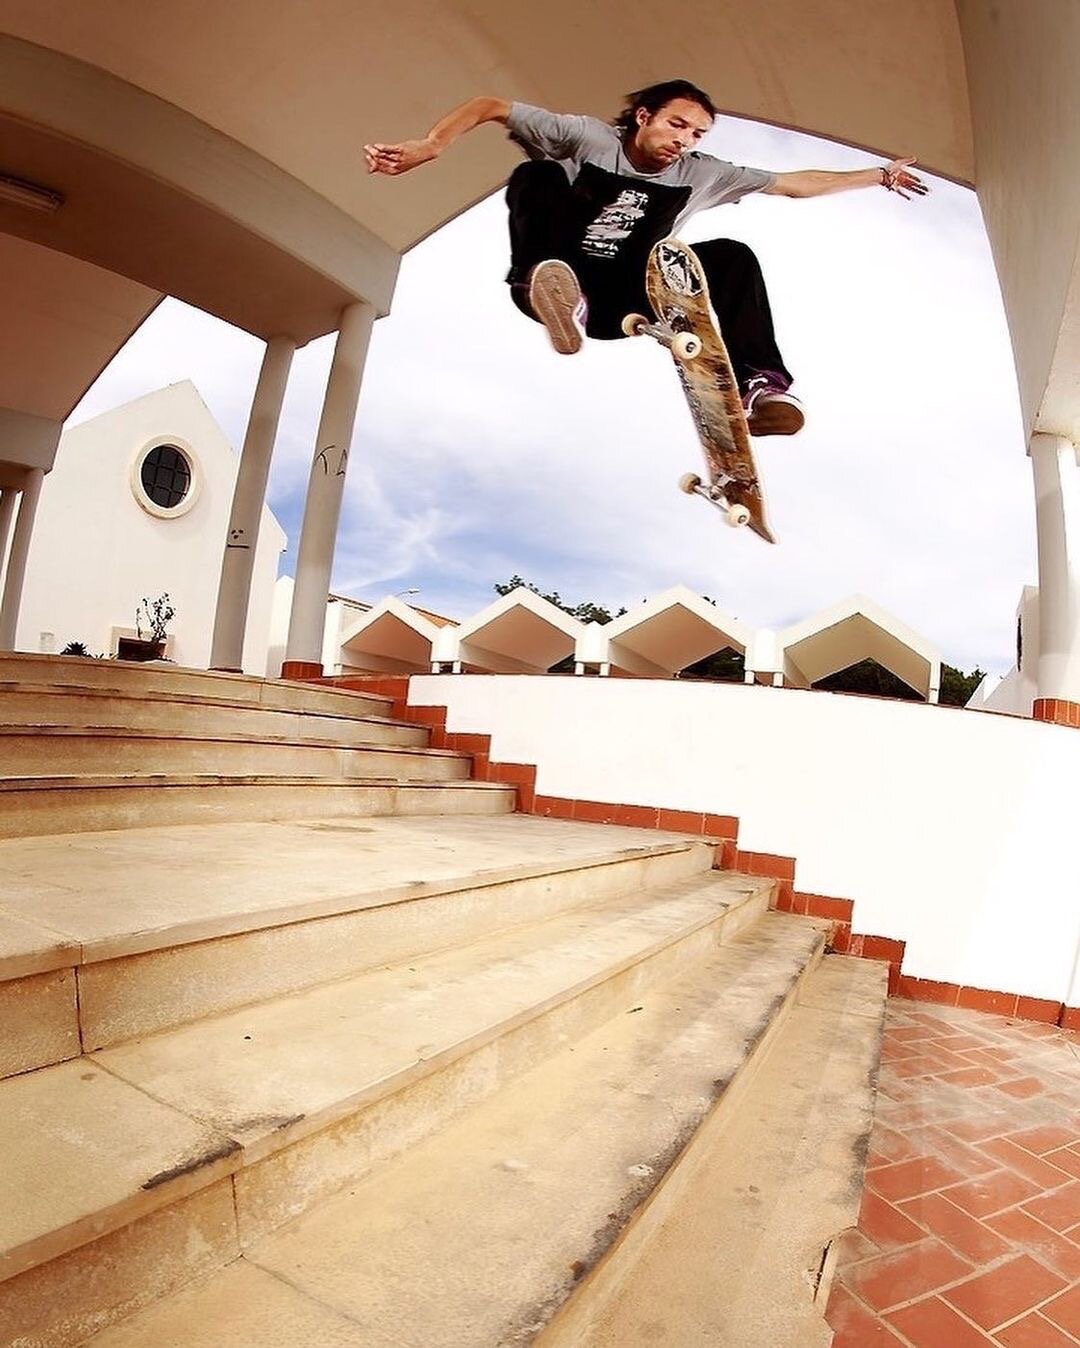 Derek Fukuhara 360 flip Portugal photo @mikendo